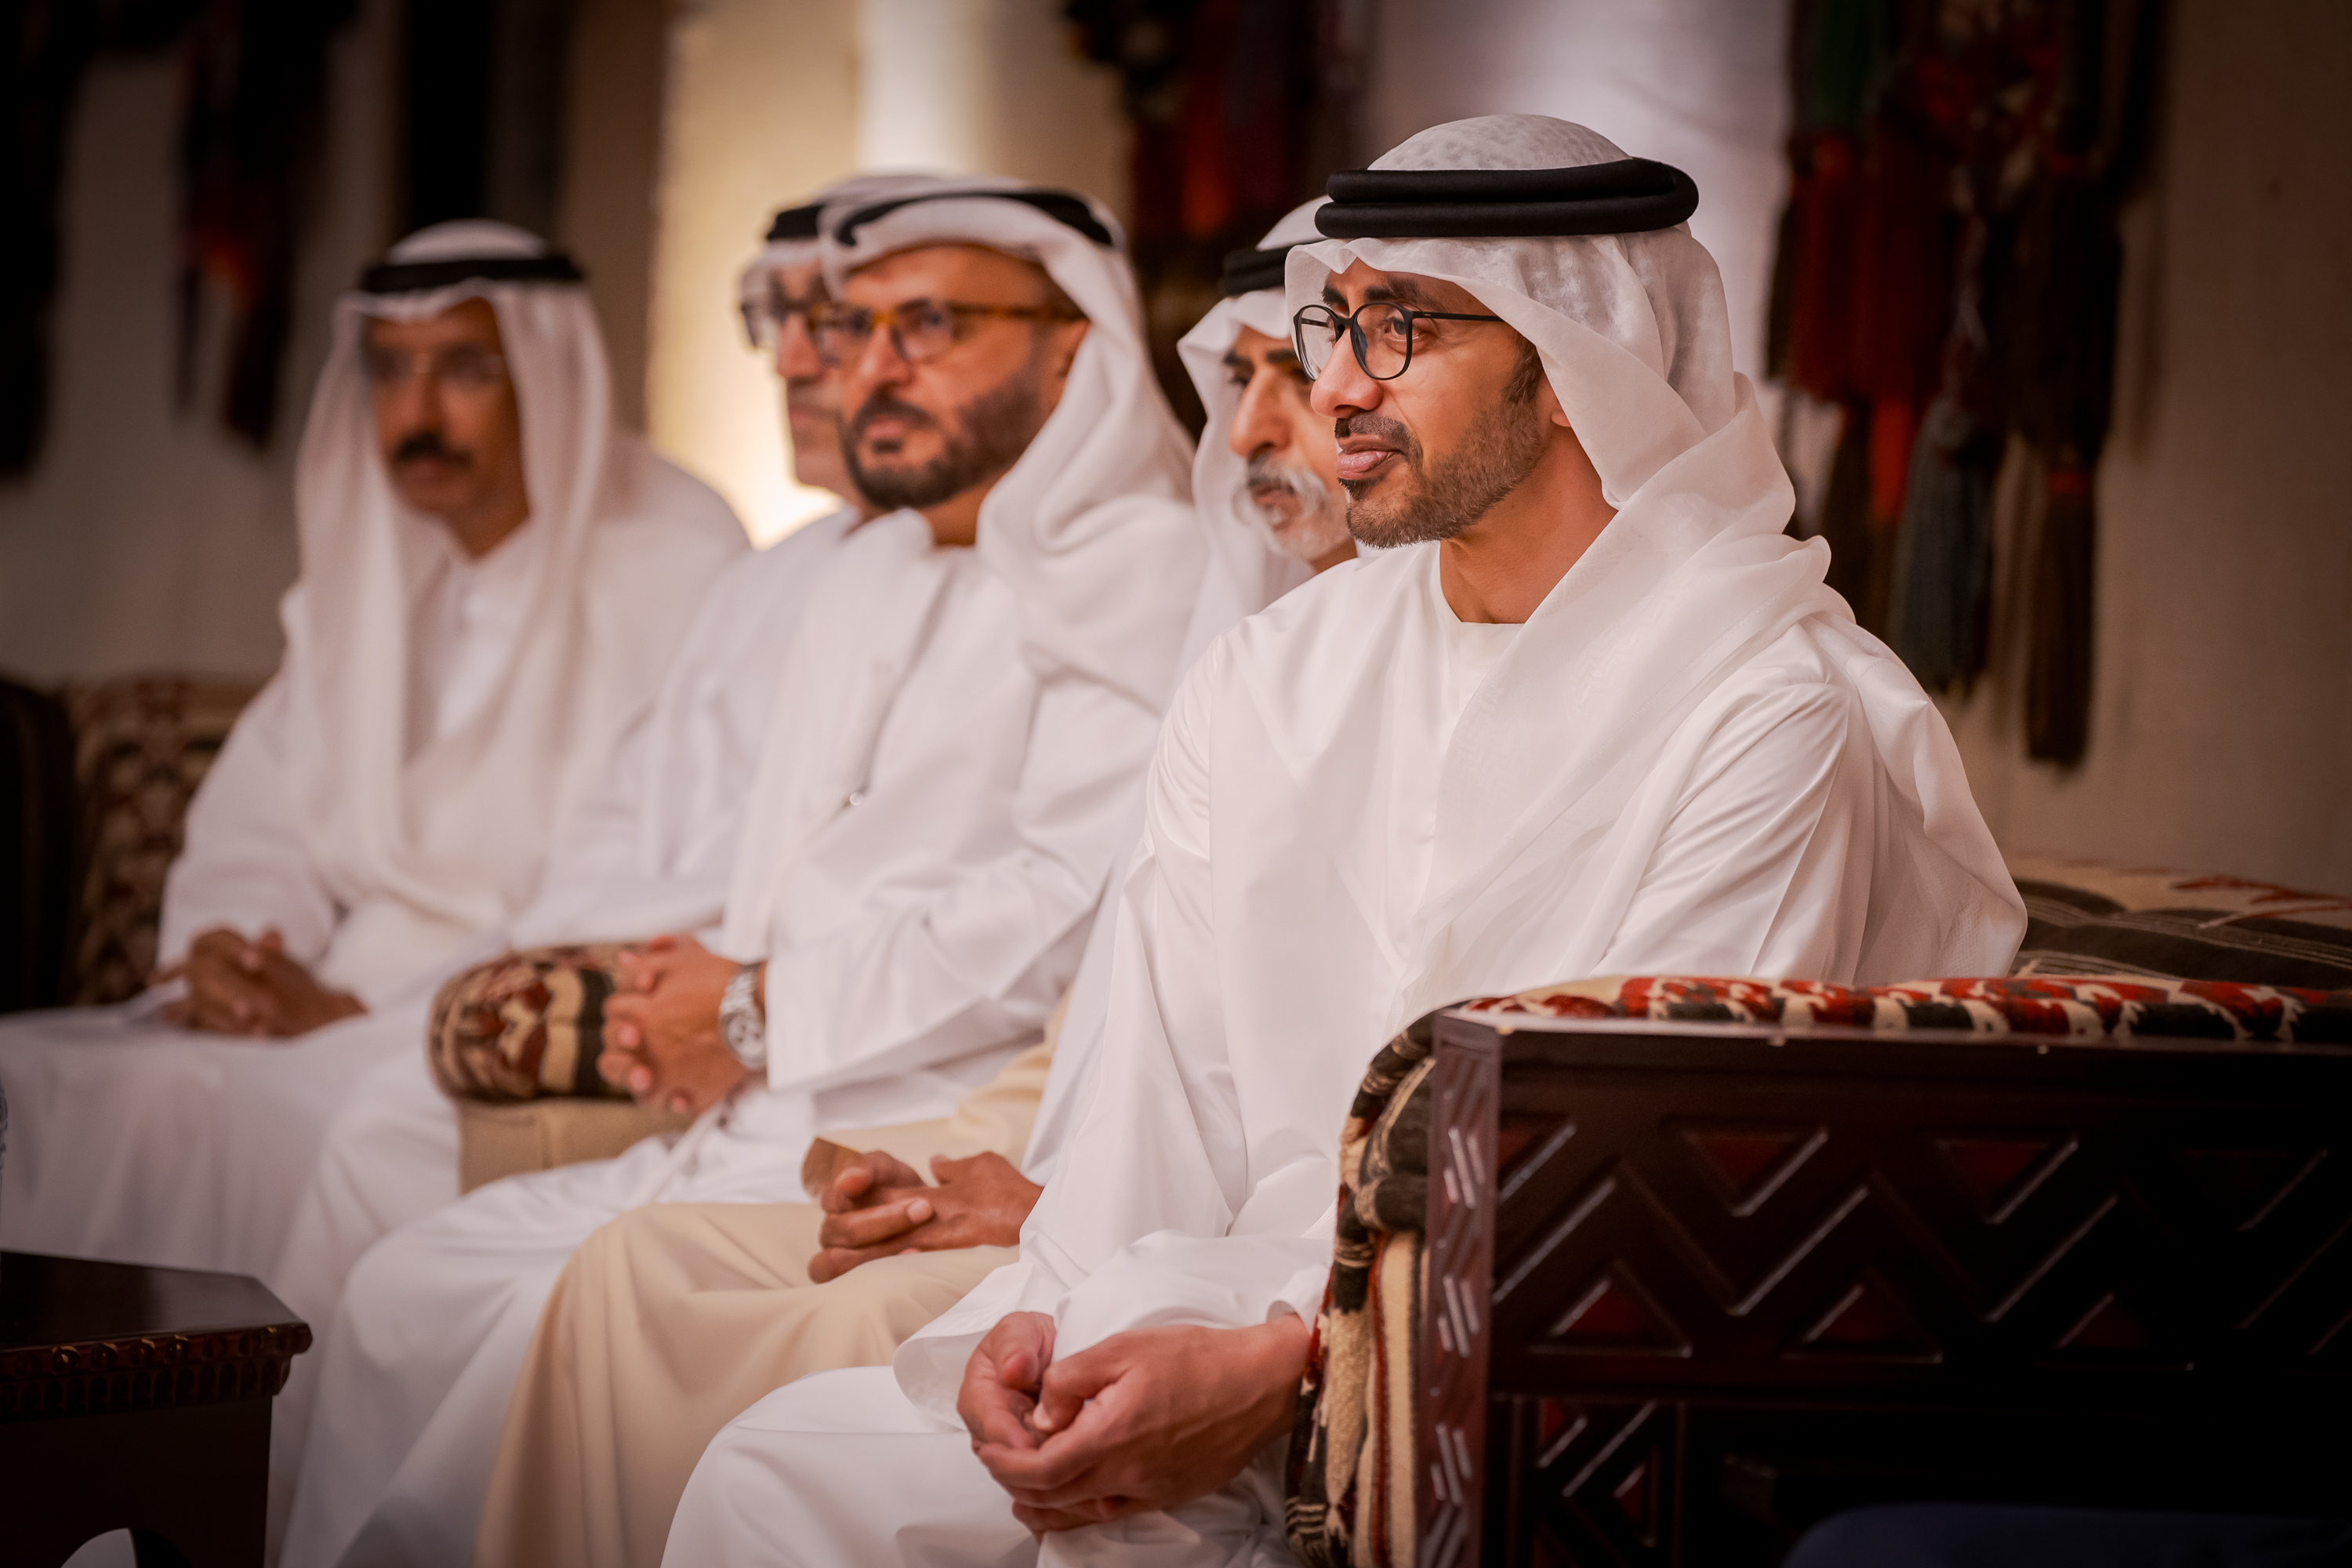 uae ministers, senior officials offer condolences over death of prince badr bin abdul mohsen in riyadh